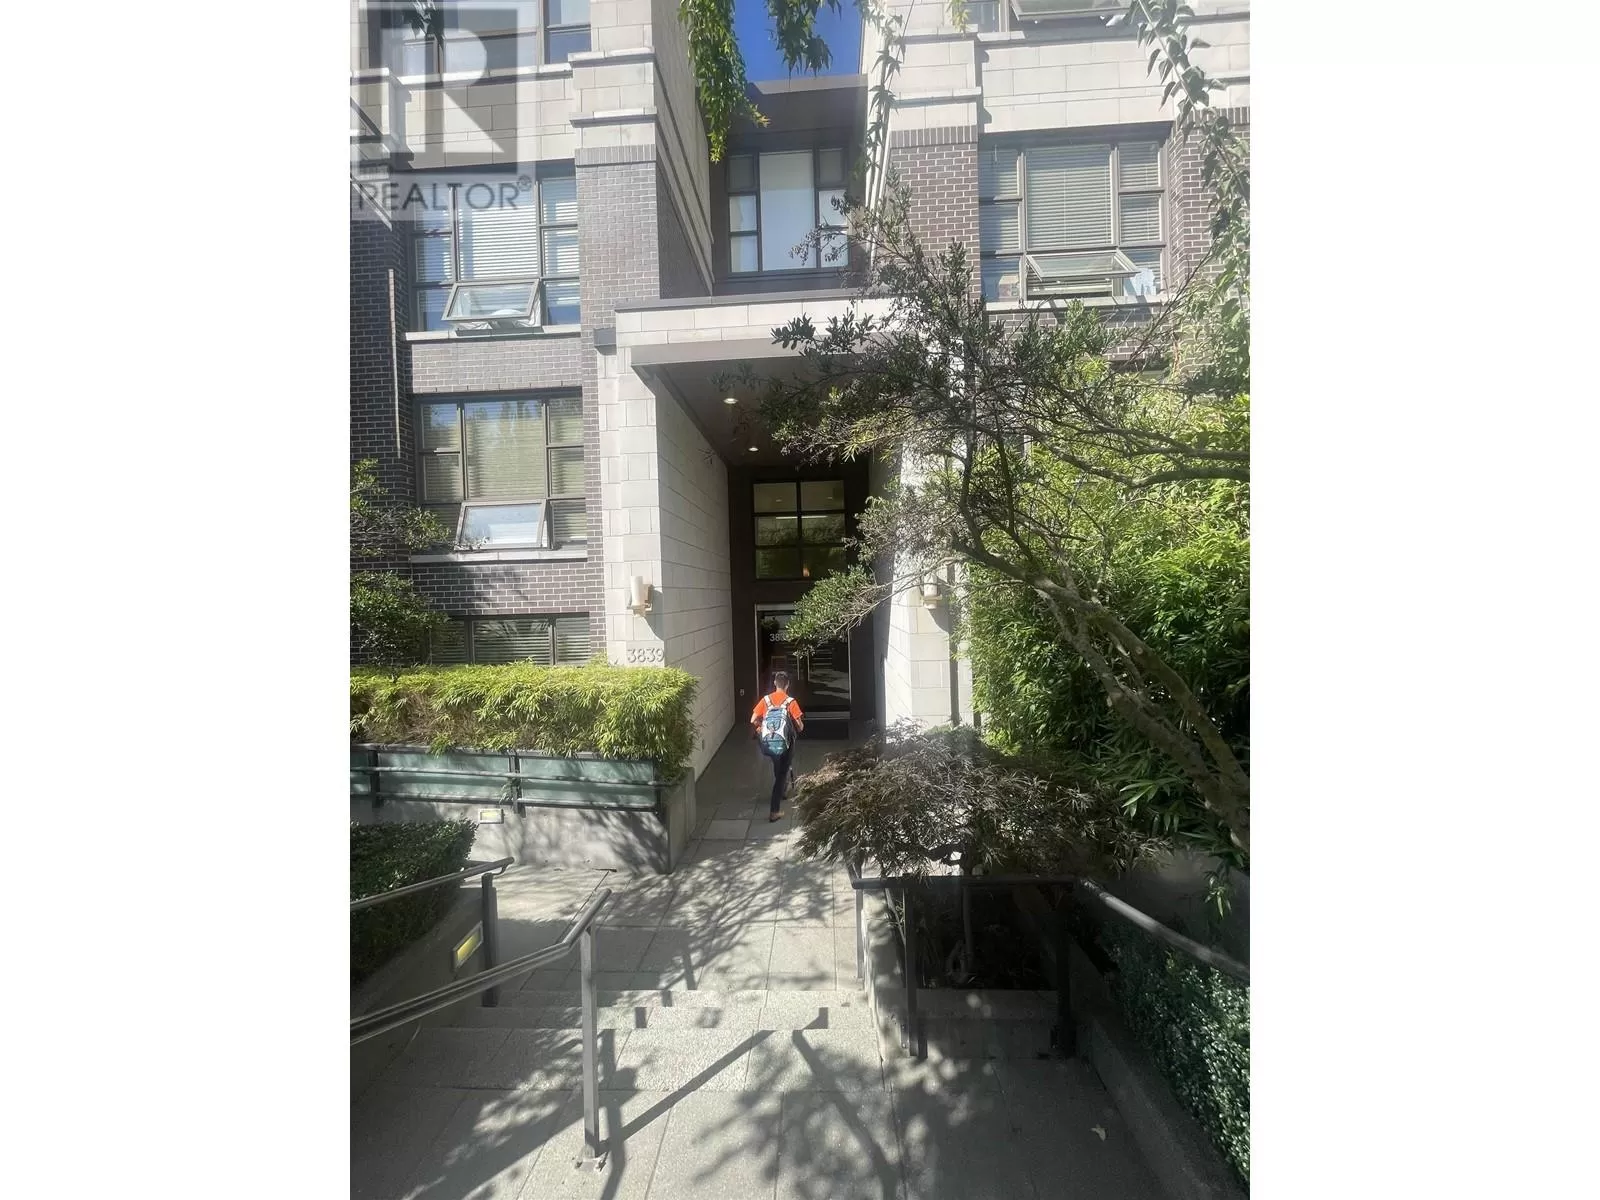 Apartment for rent: 305 3839 W 4th Avenue, Vancouver, British Columbia V6R 1P8